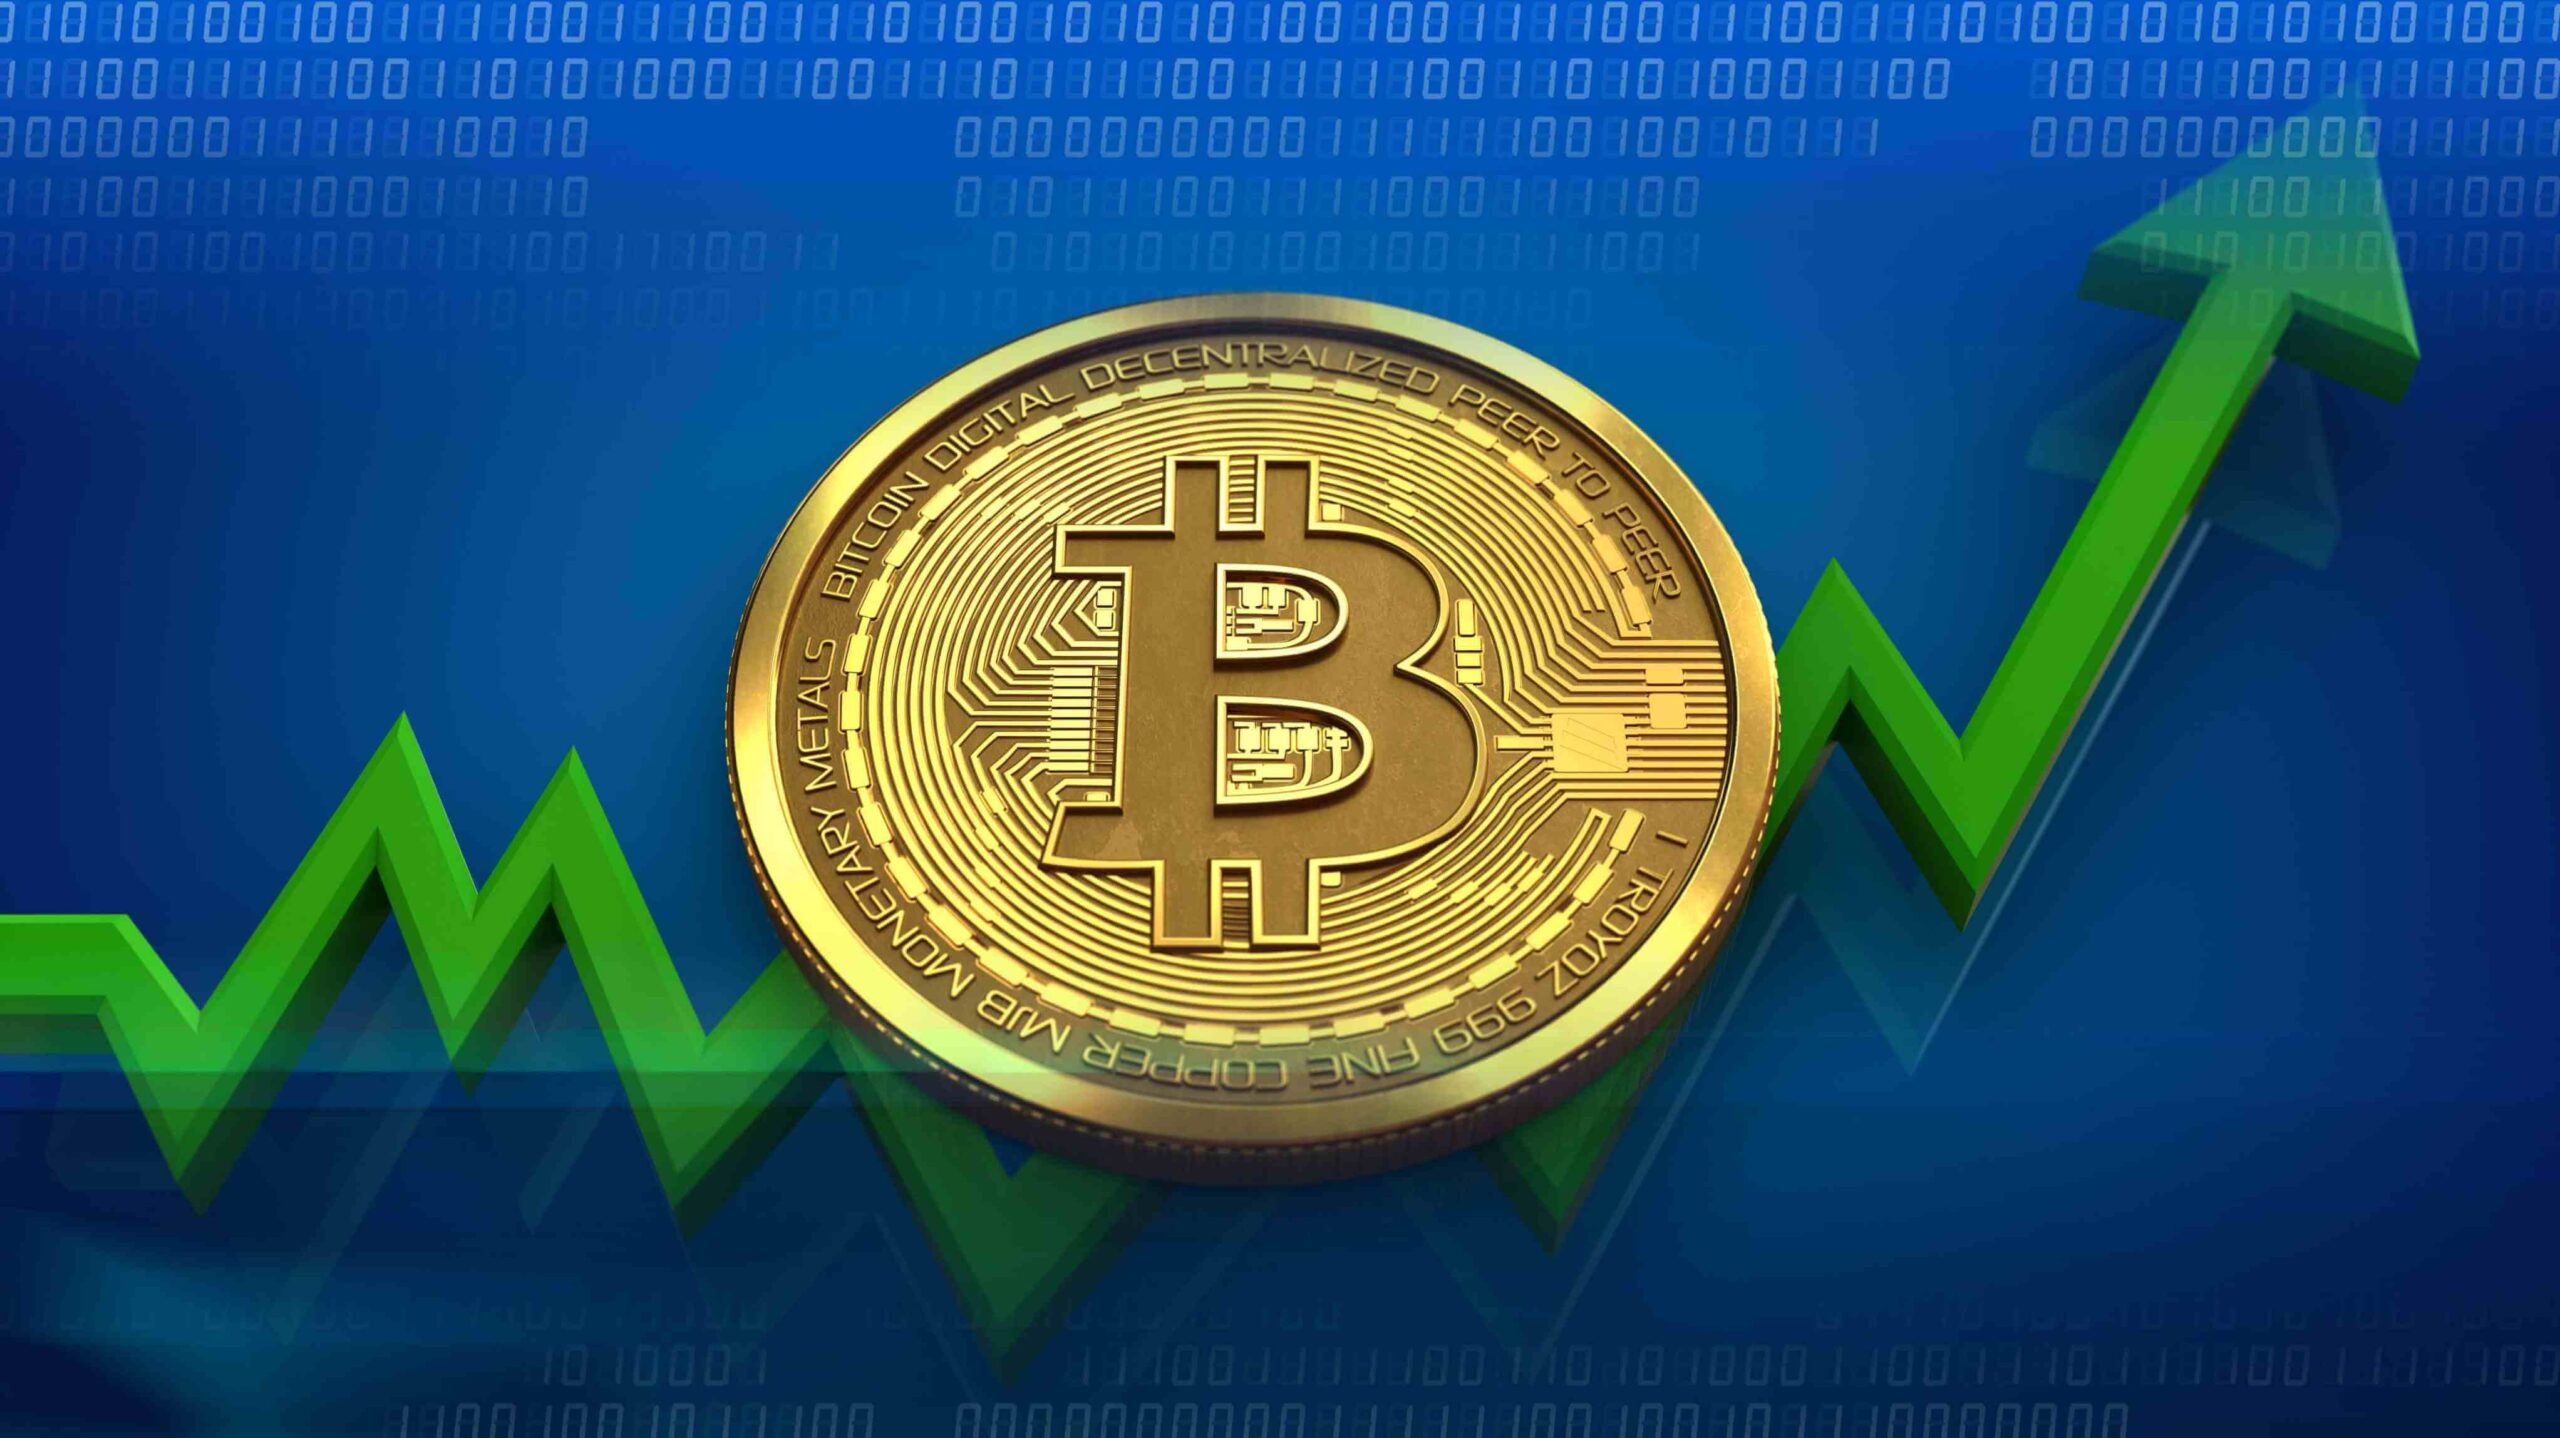 Bitcoin Price Analysis - BTCUSD Recovers Sharply Higher